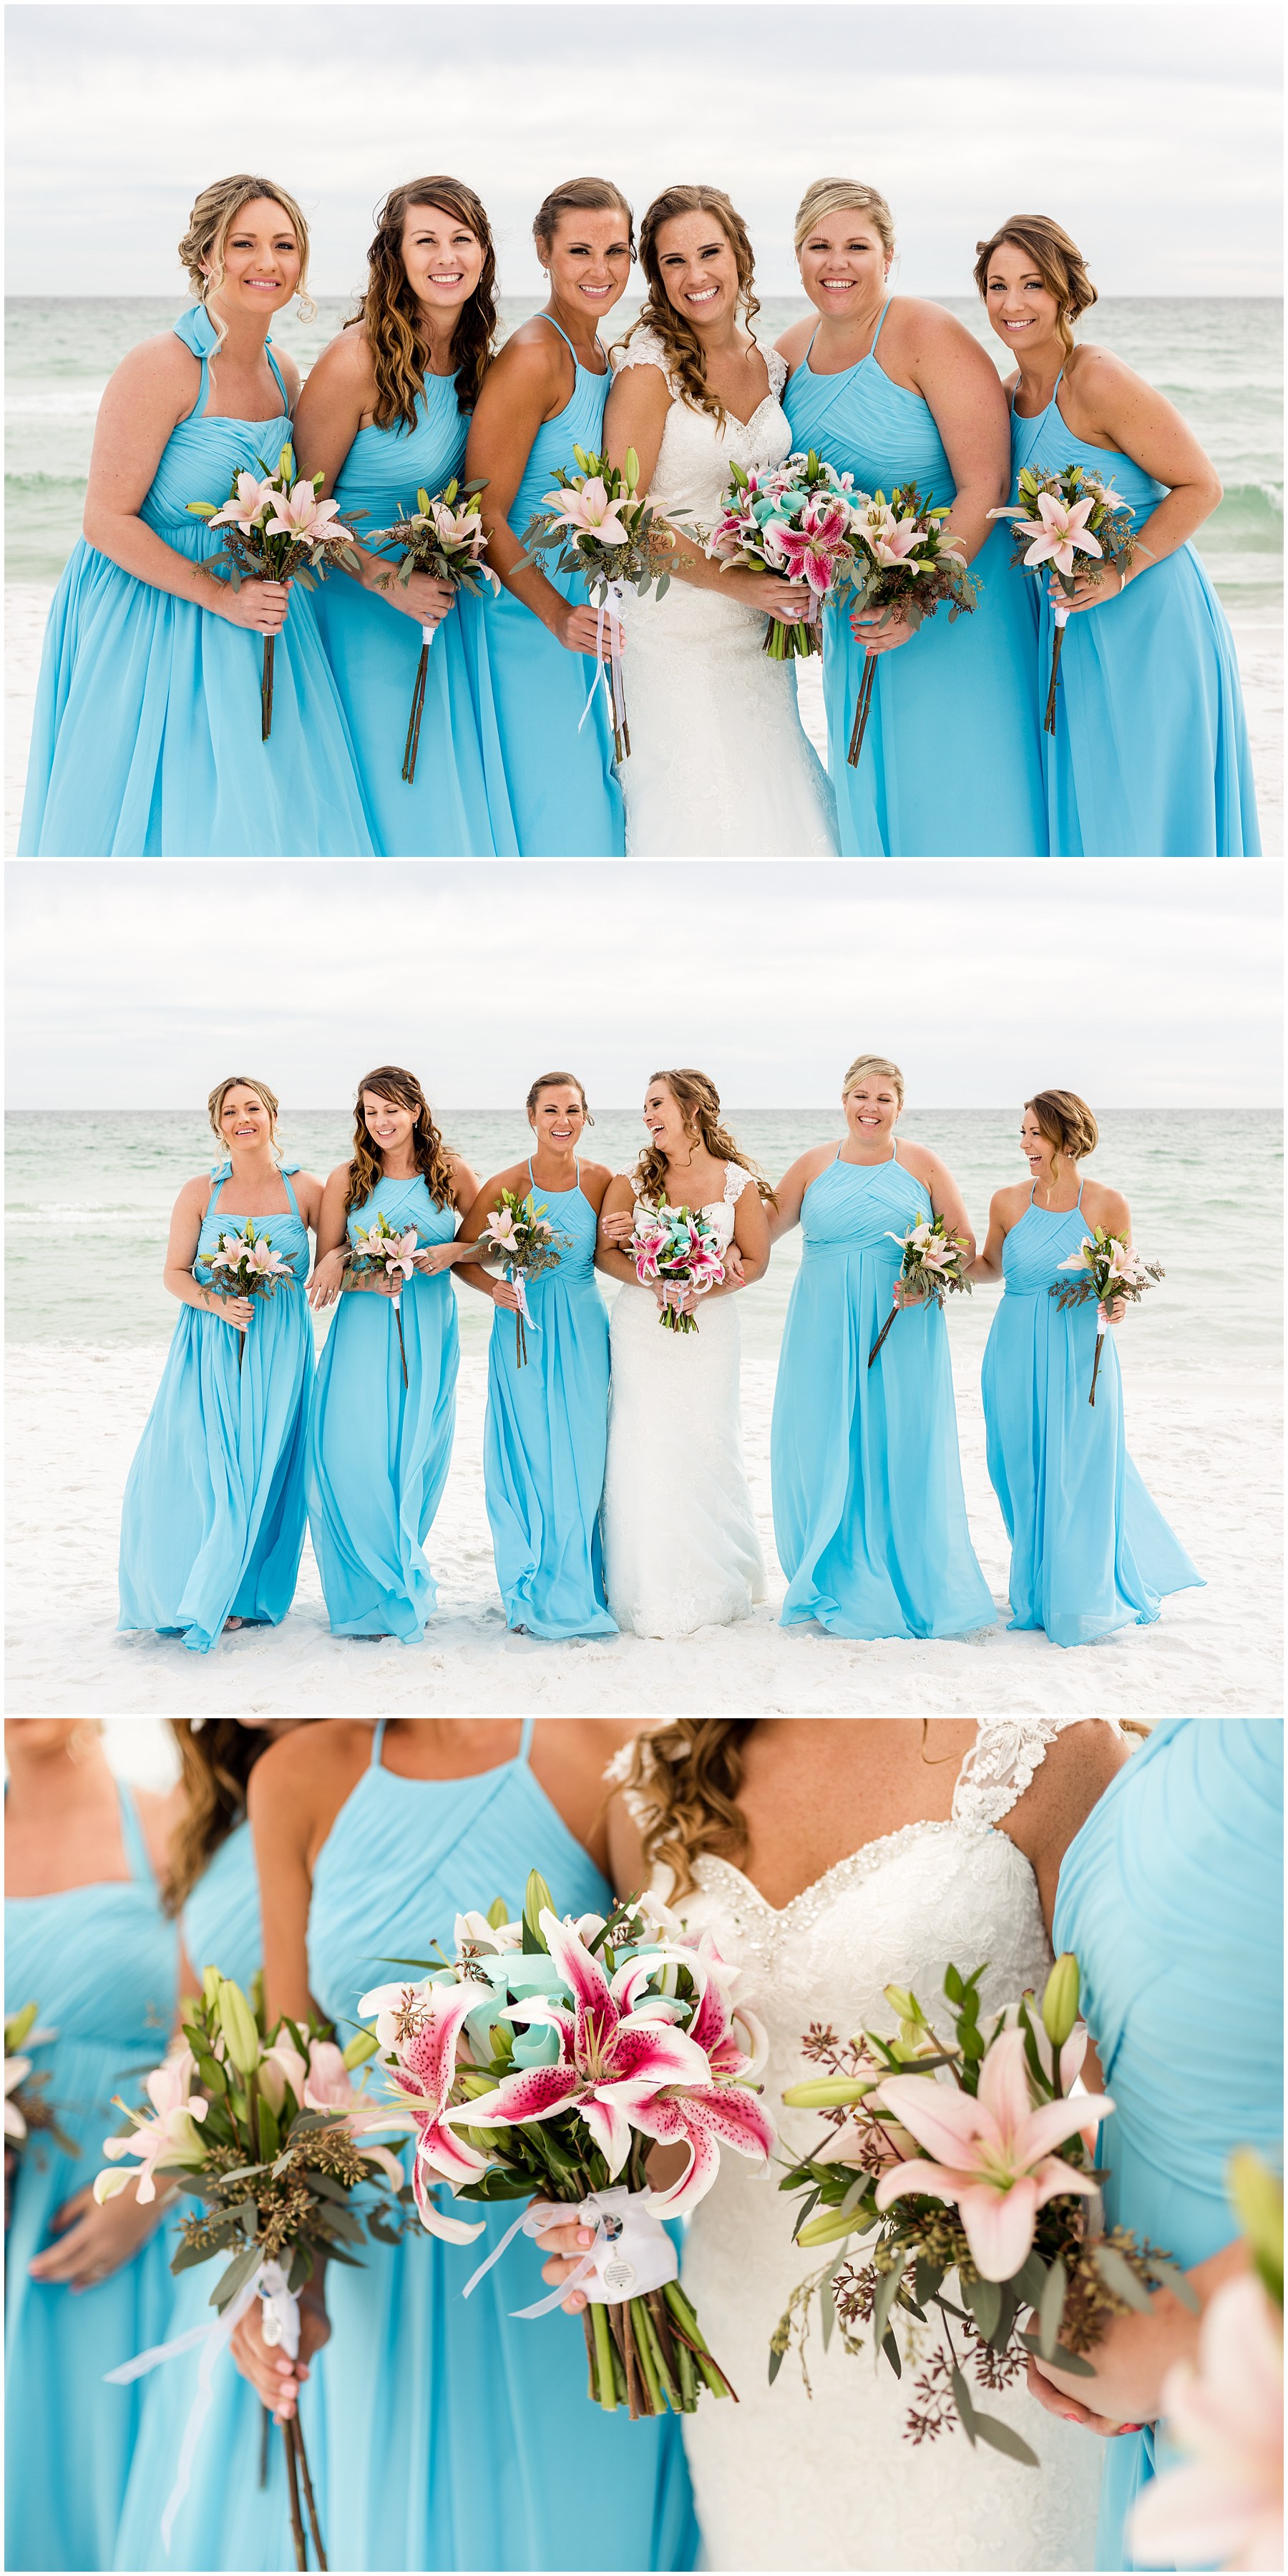 Wedding Party Photos on the beach in Destin, FL